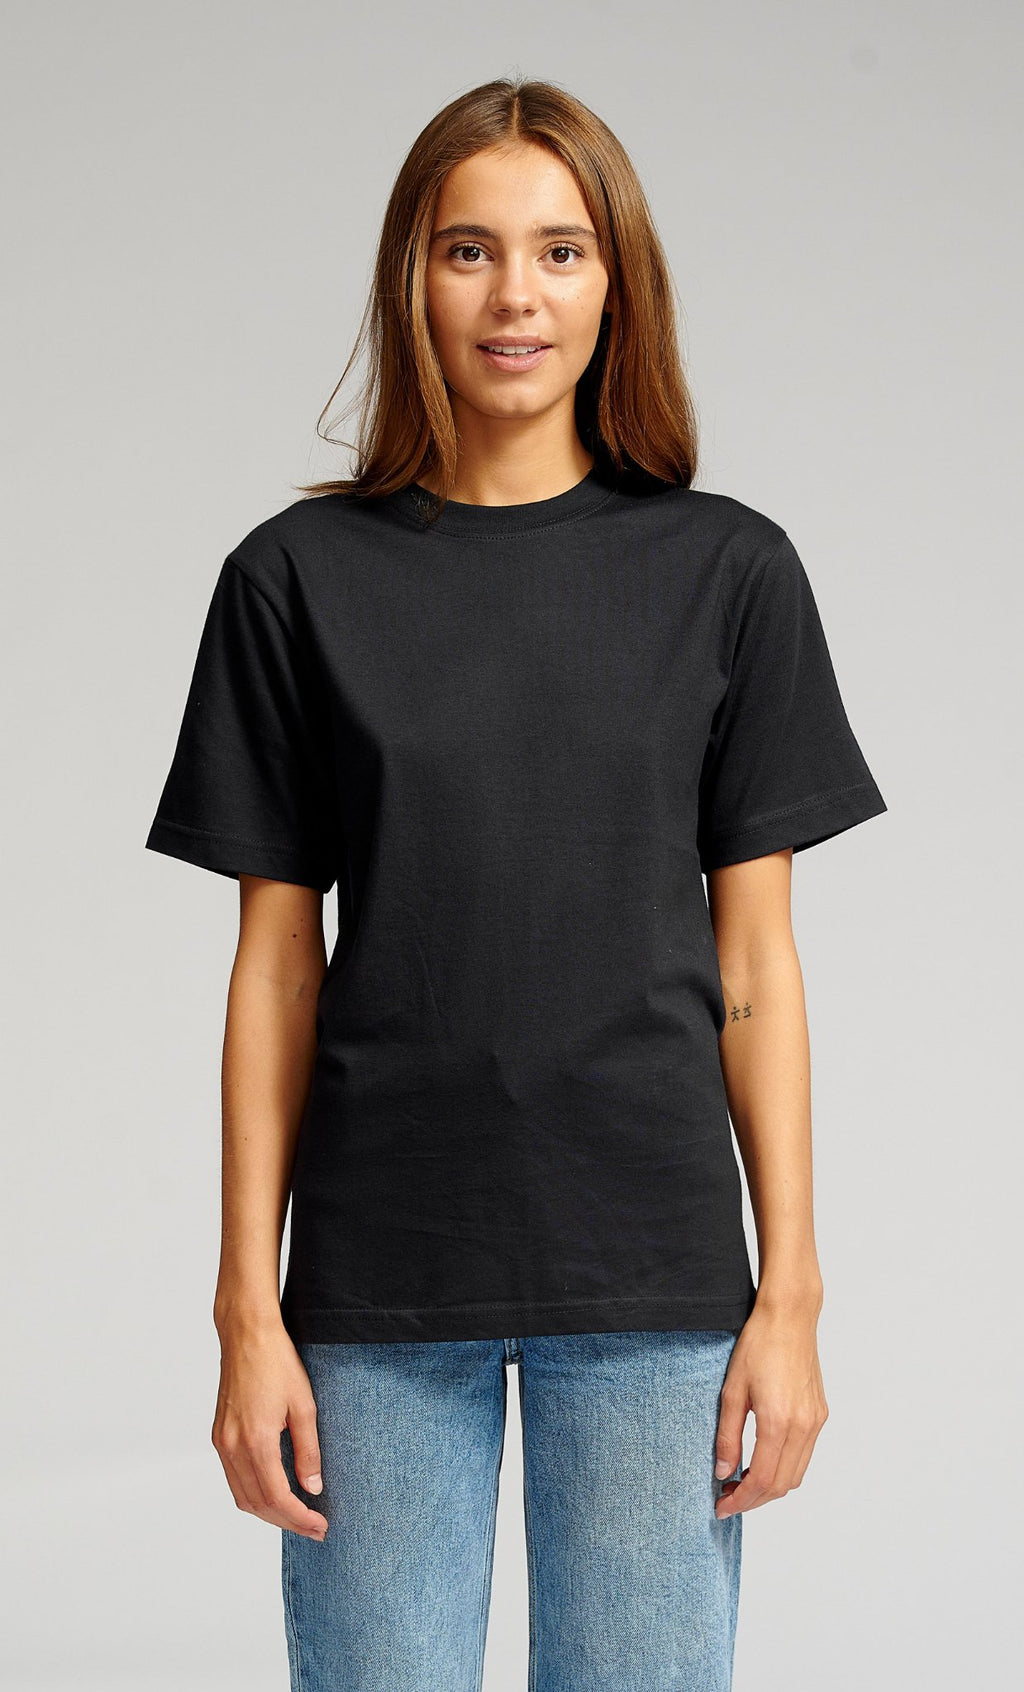 Oversized T-shirt - Vrouwen Package Deal (9 pcs.)